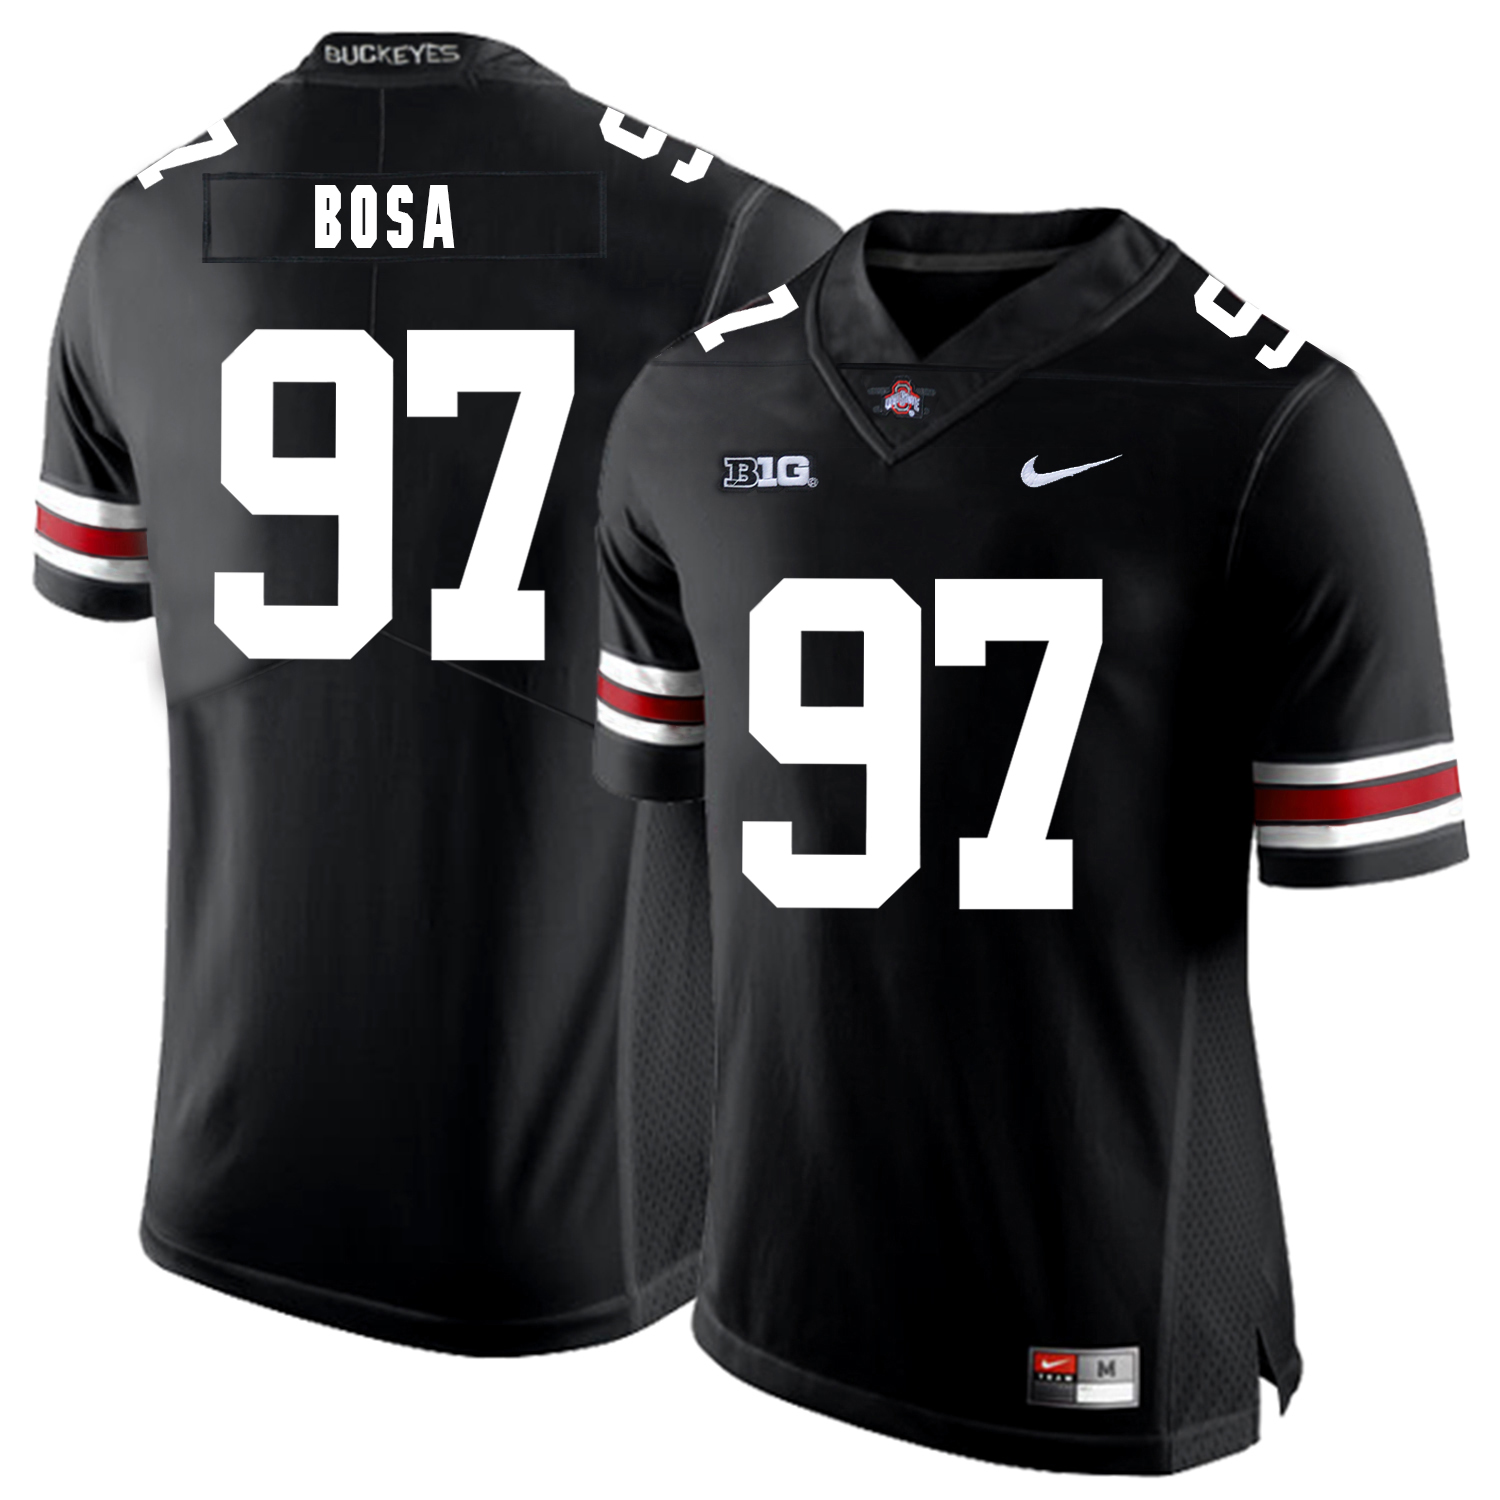 Ohio State Buckeyes 97 Joey Bosa Black Nike College Football Jersey